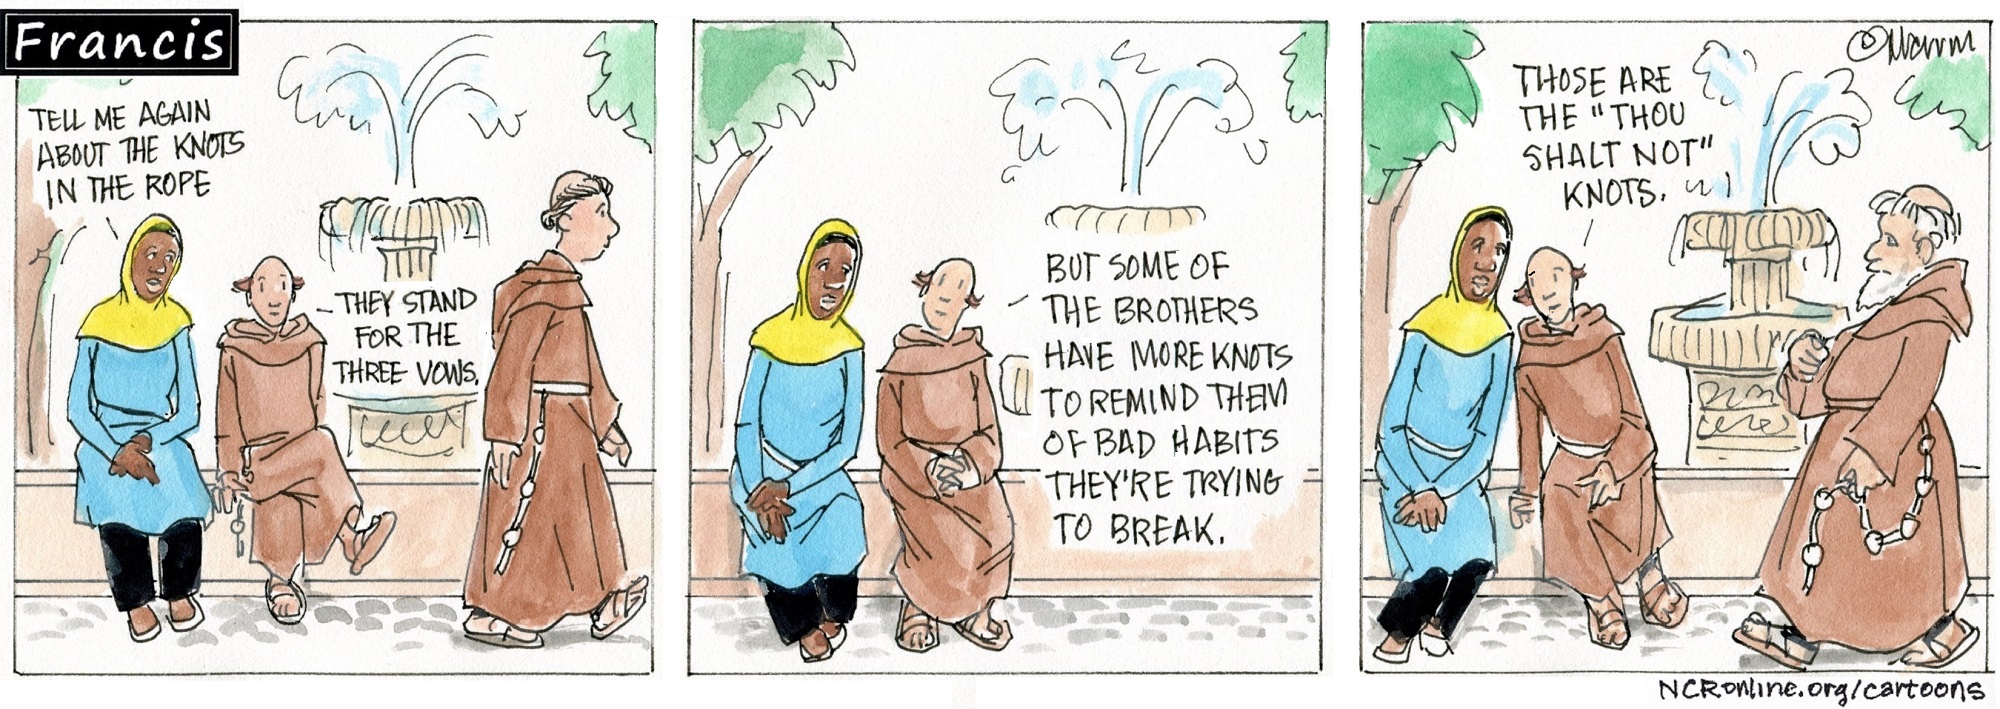 Francis, the comic strip | National Catholic Reporter